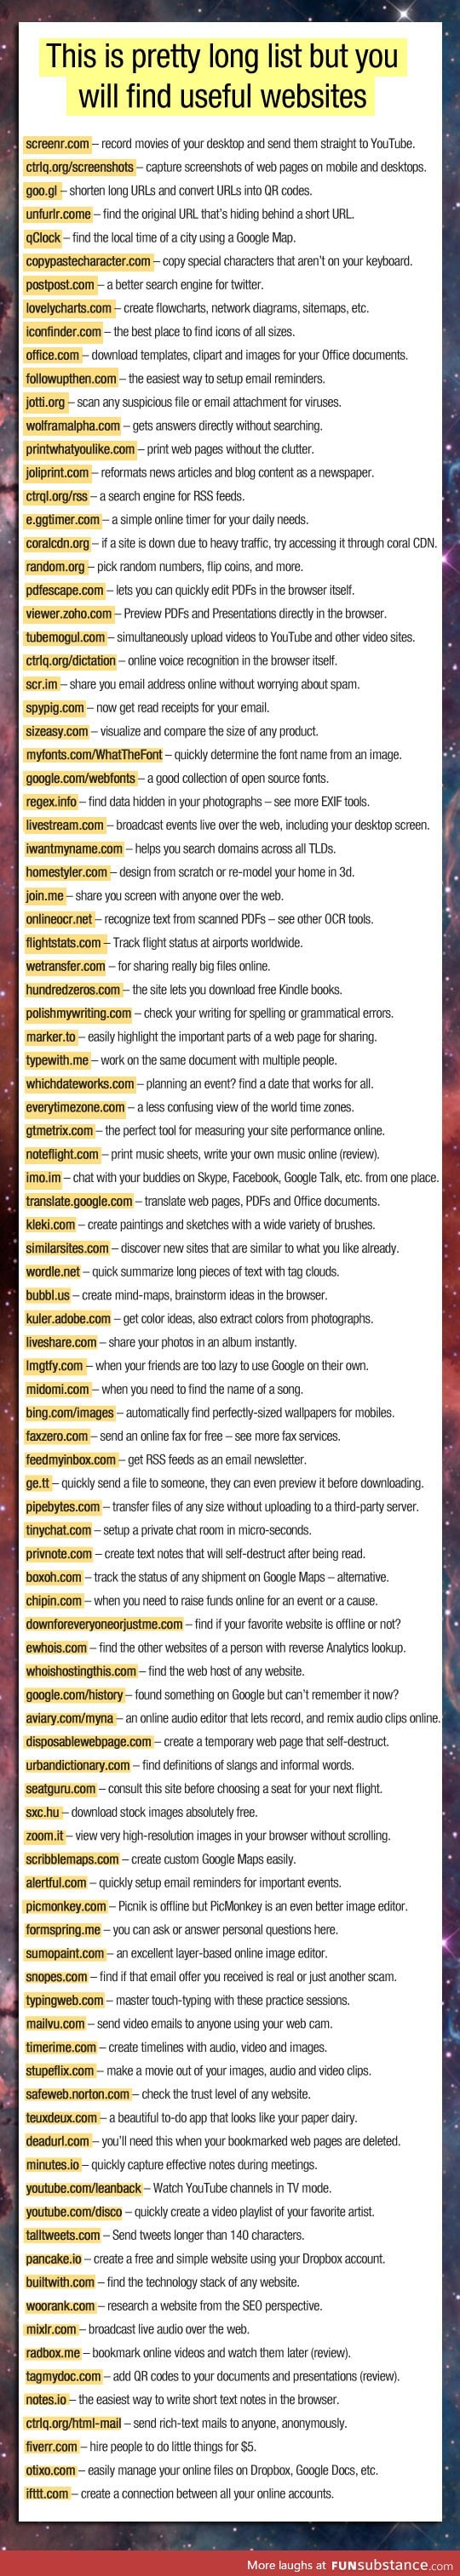 list-of-very-useful-websites-funsubstance